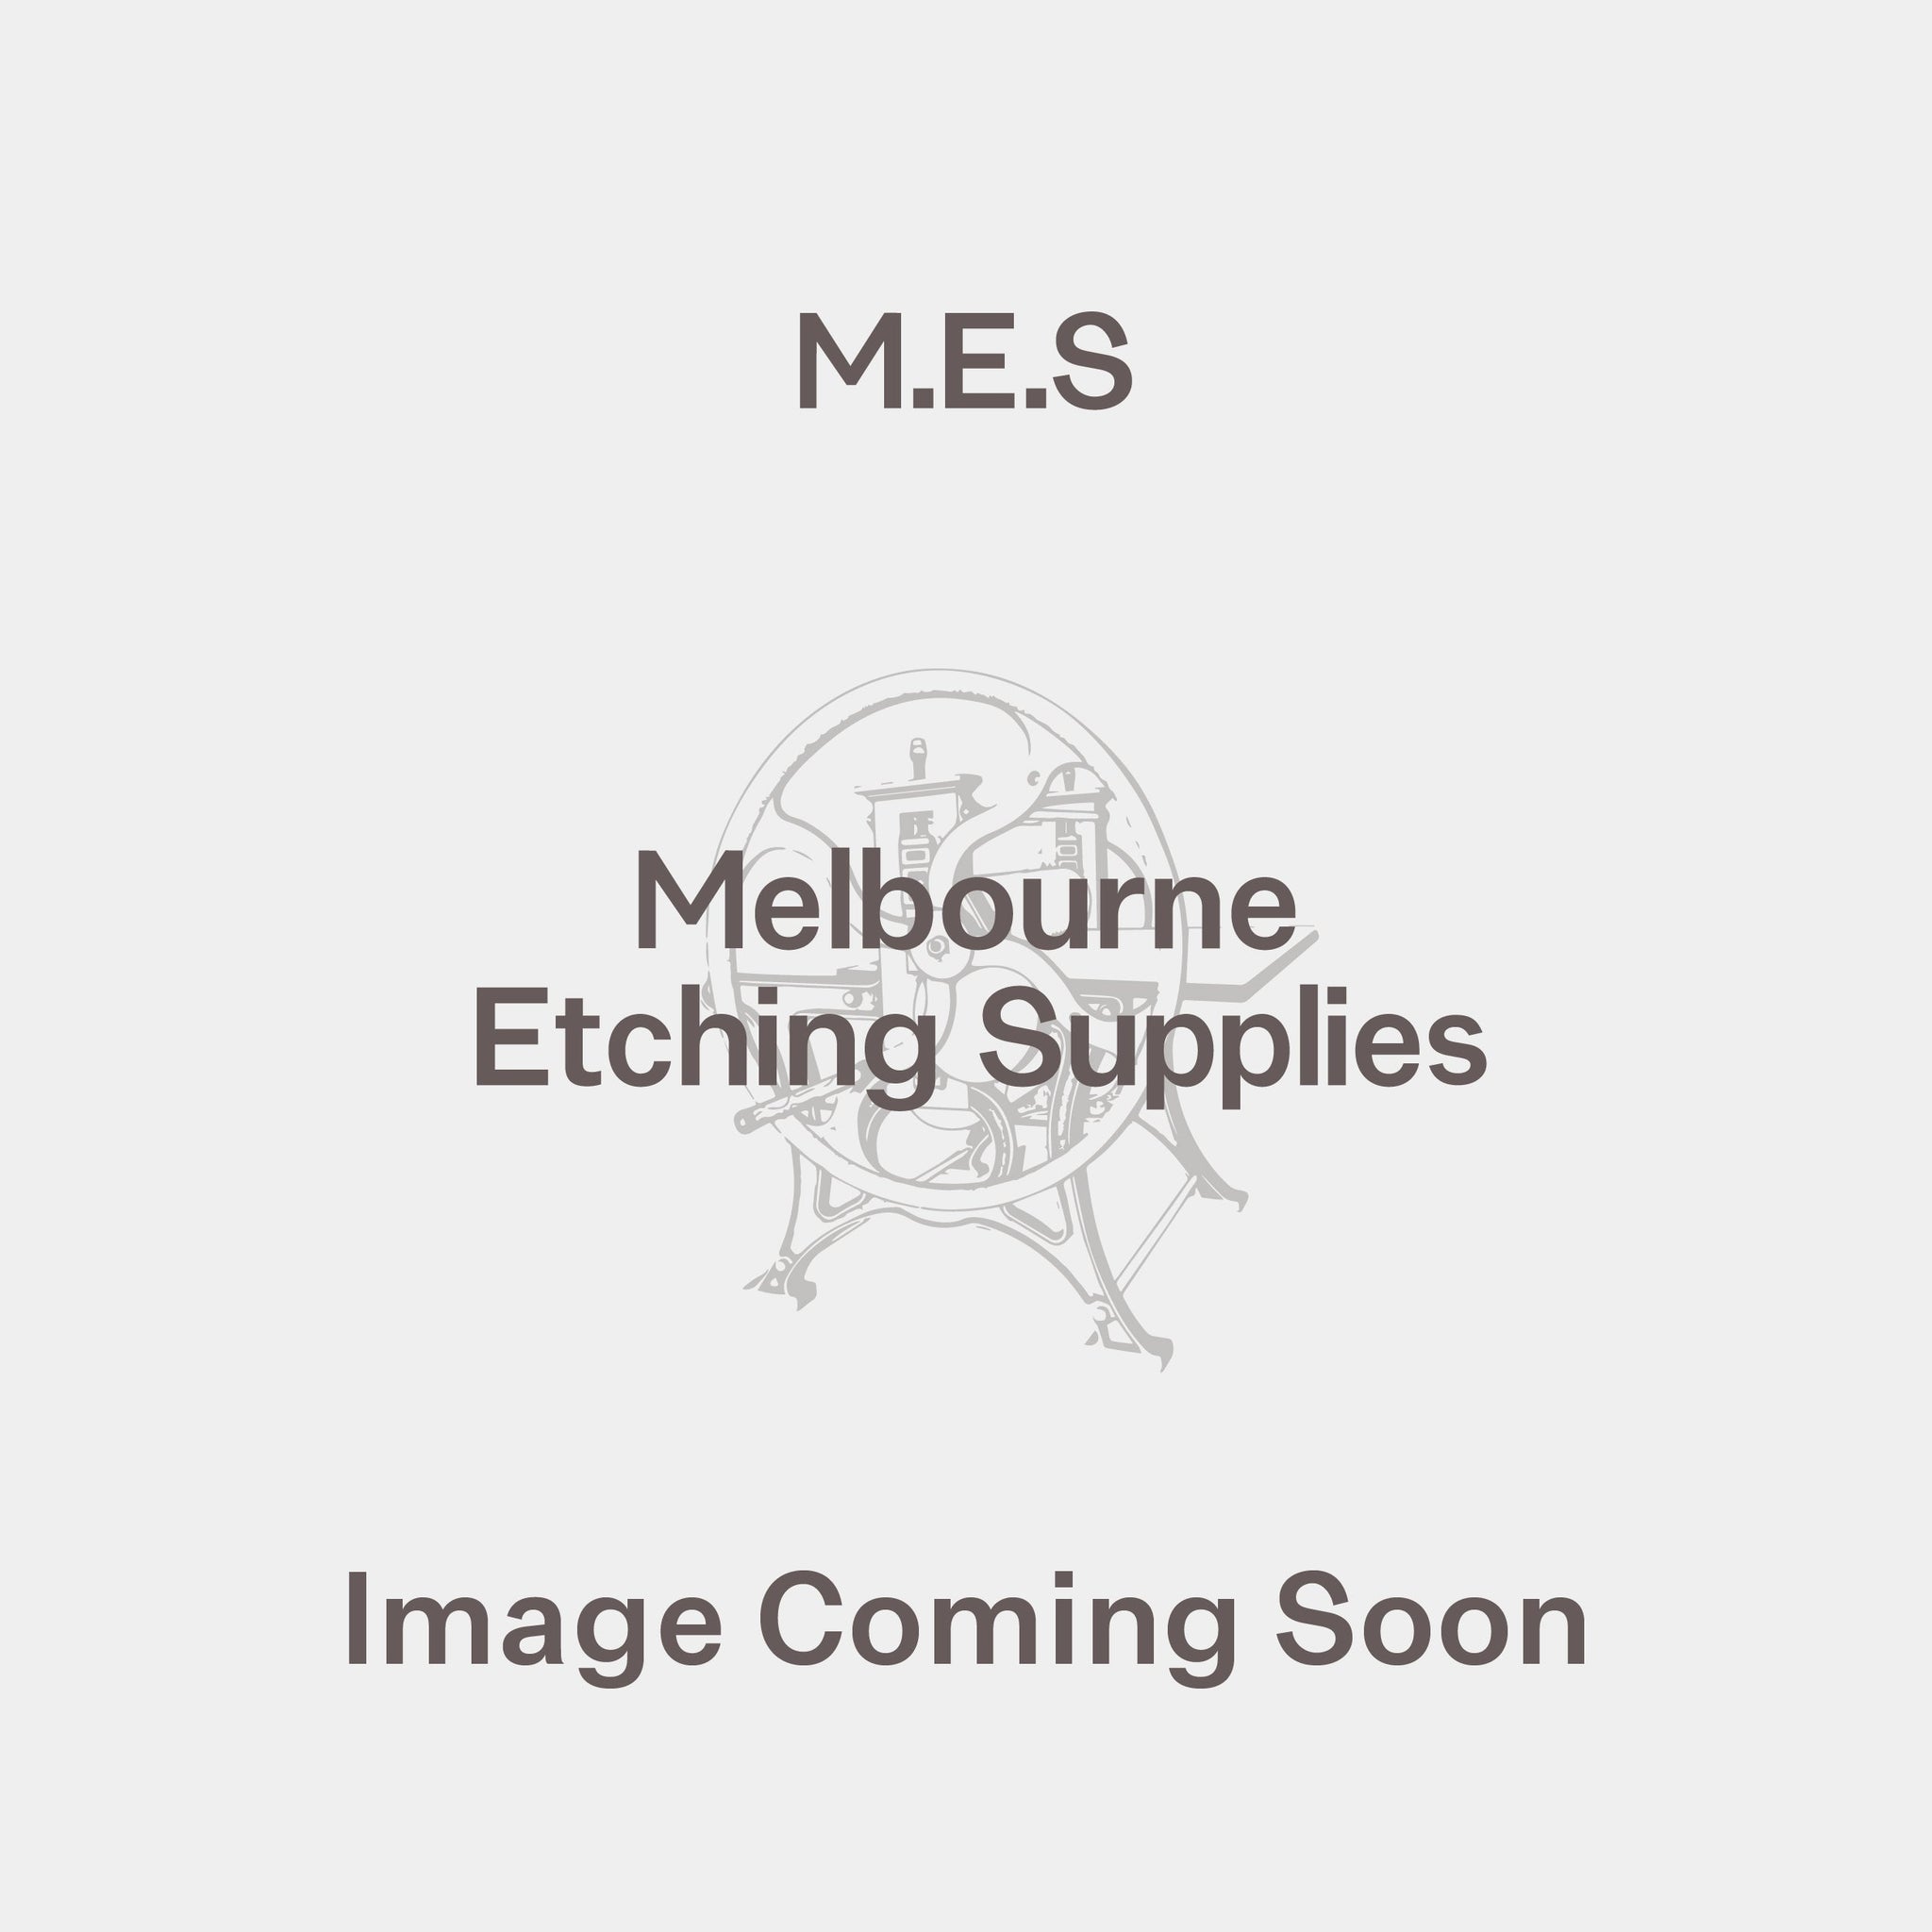 HFAW Economy Scraper - Melbourne Etching Supplies